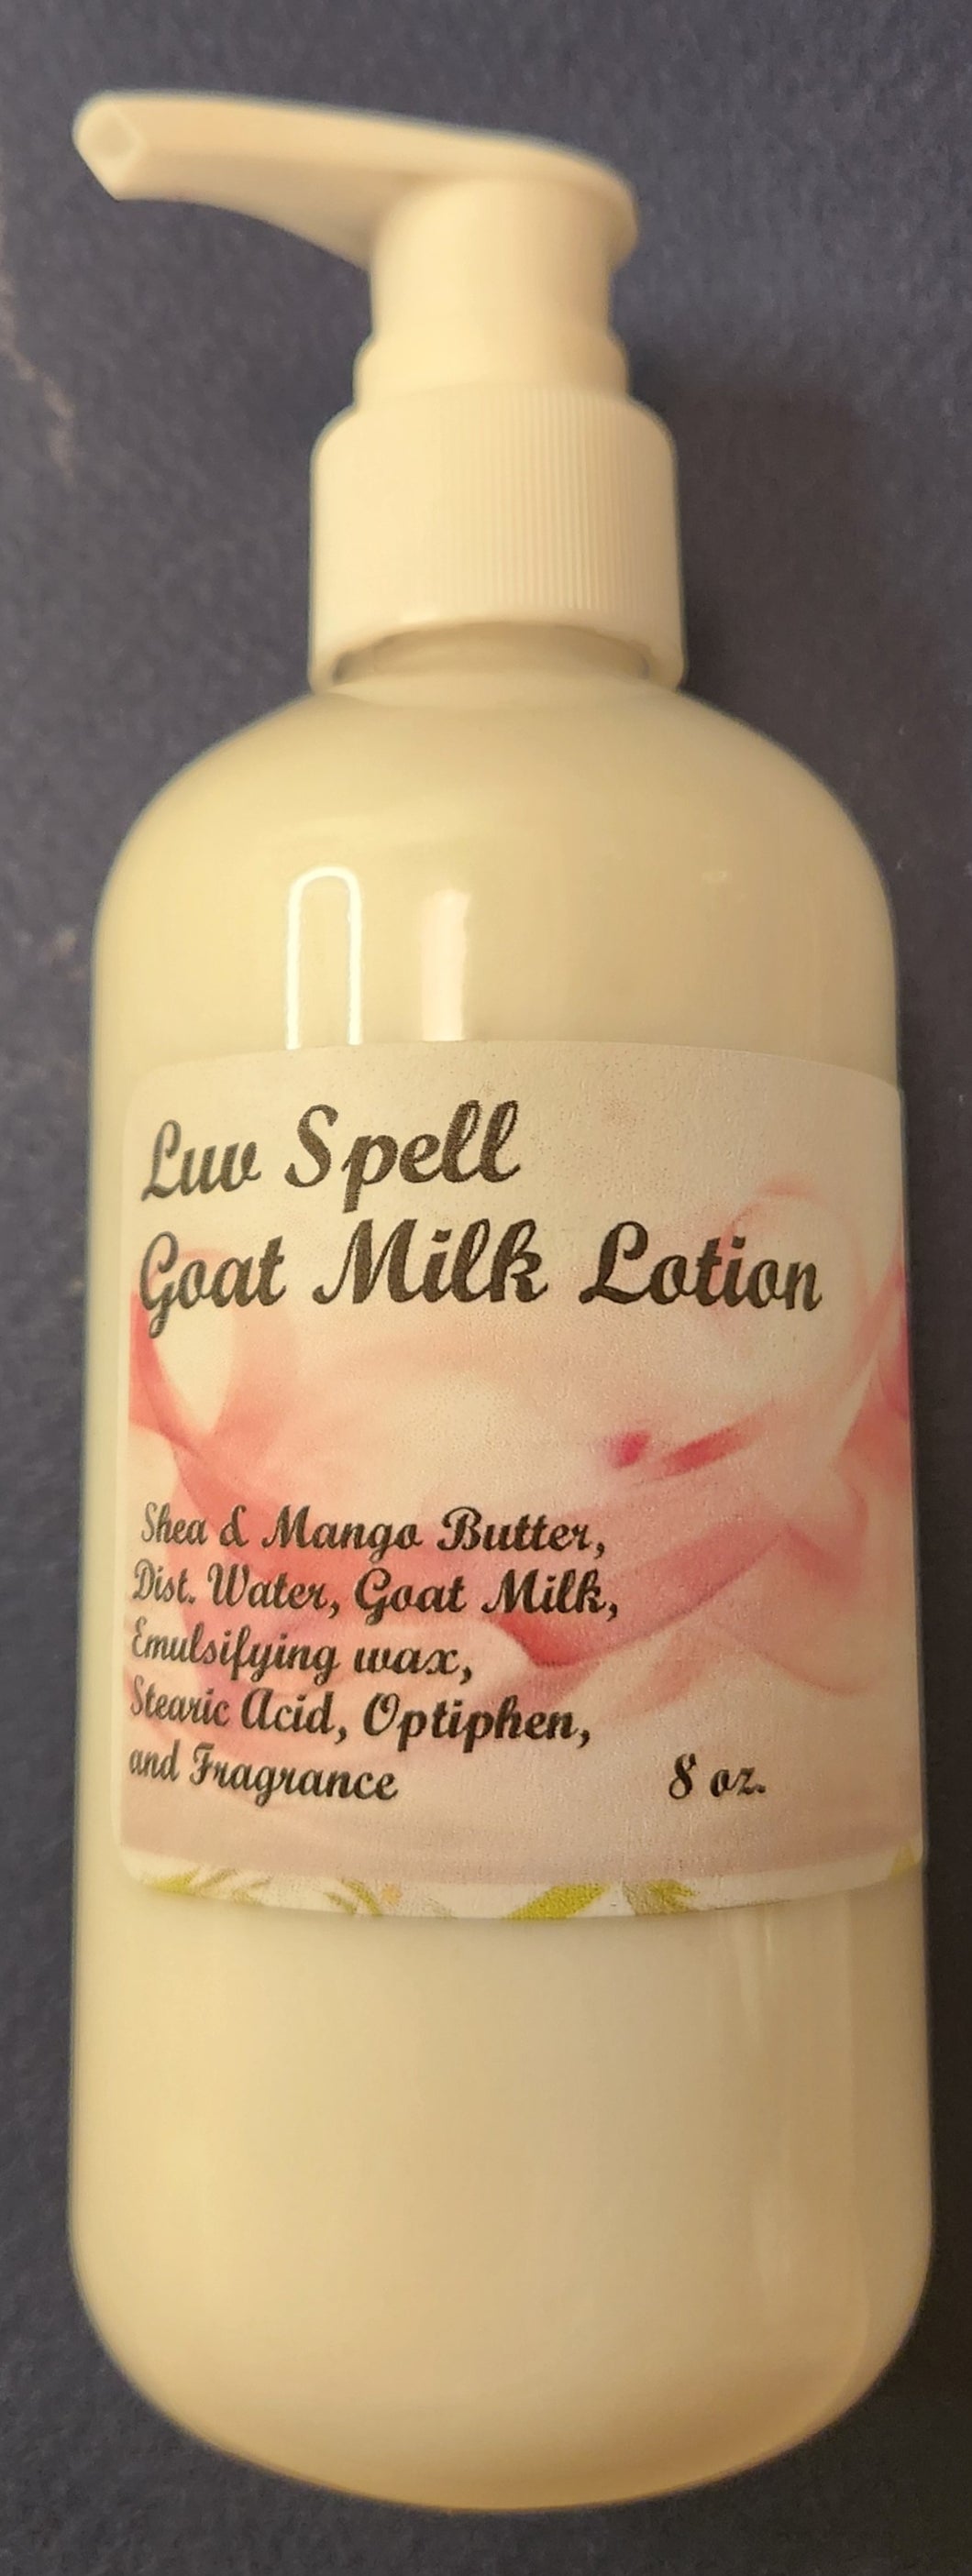 Goat Milk Lotion - Luv Spell